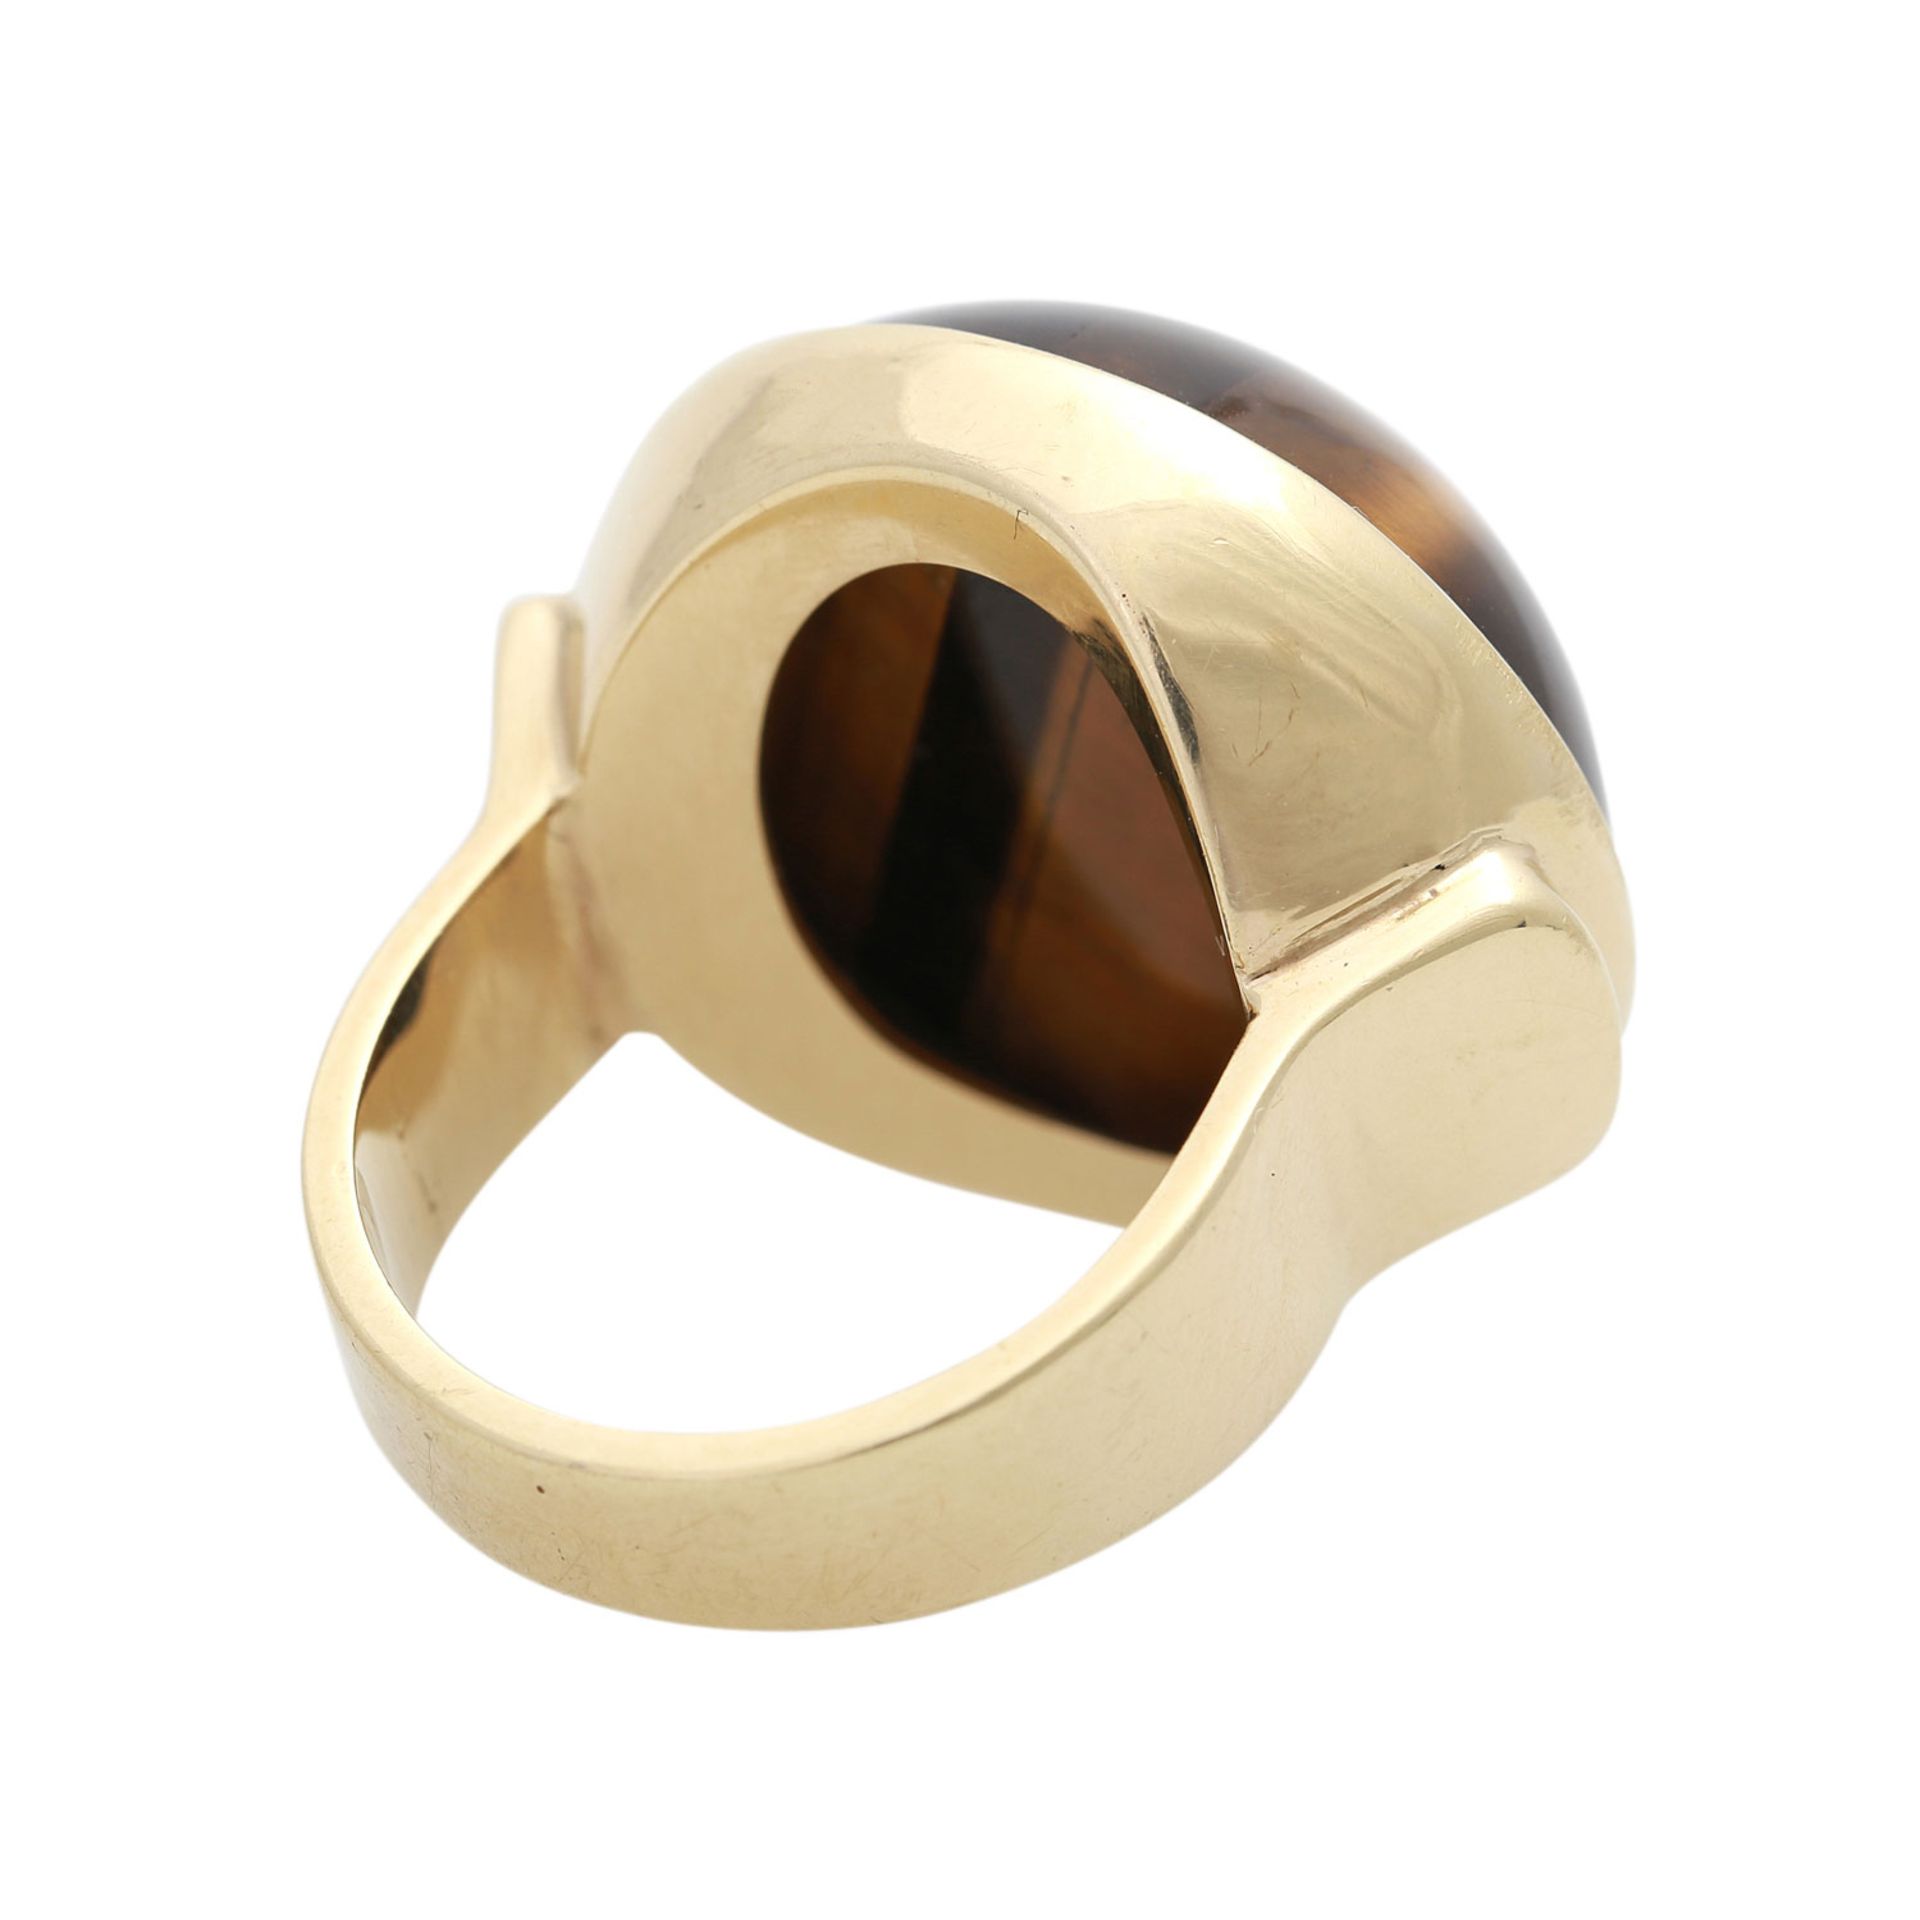 Ring mit großem Tigerauge-Cabochon,D: ca. 22 mm, GG 14K, 17,9 gr, RW 54, HANDARBEIT, - Image 3 of 4